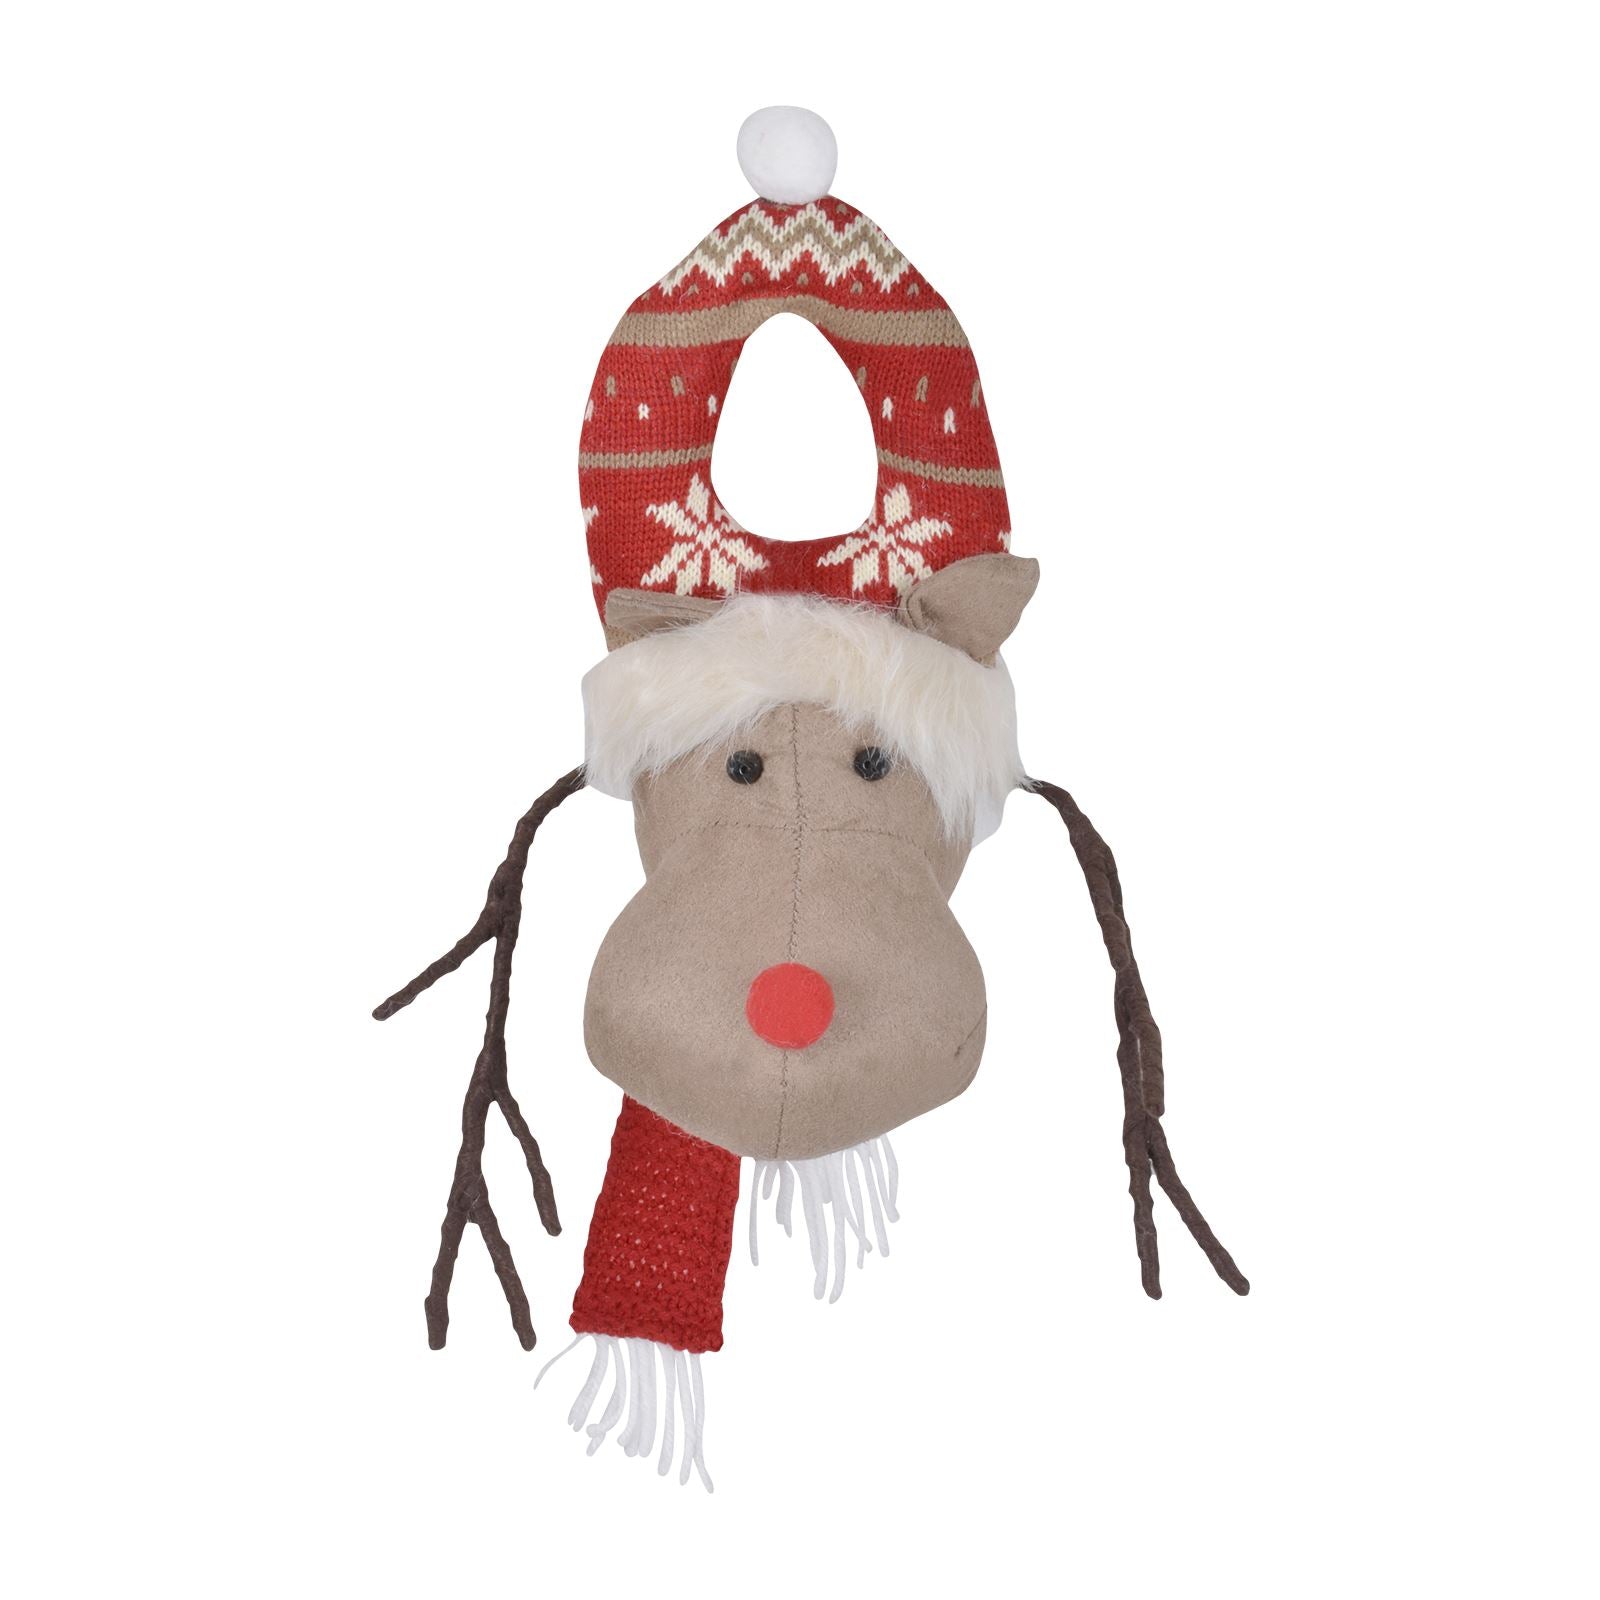 Mr Crimbo Christmas Novelty Door Hanger Plush Reindeer Snowman - MrCrimbo.co.uk -XS4366 - Reindeer -christmas decorations